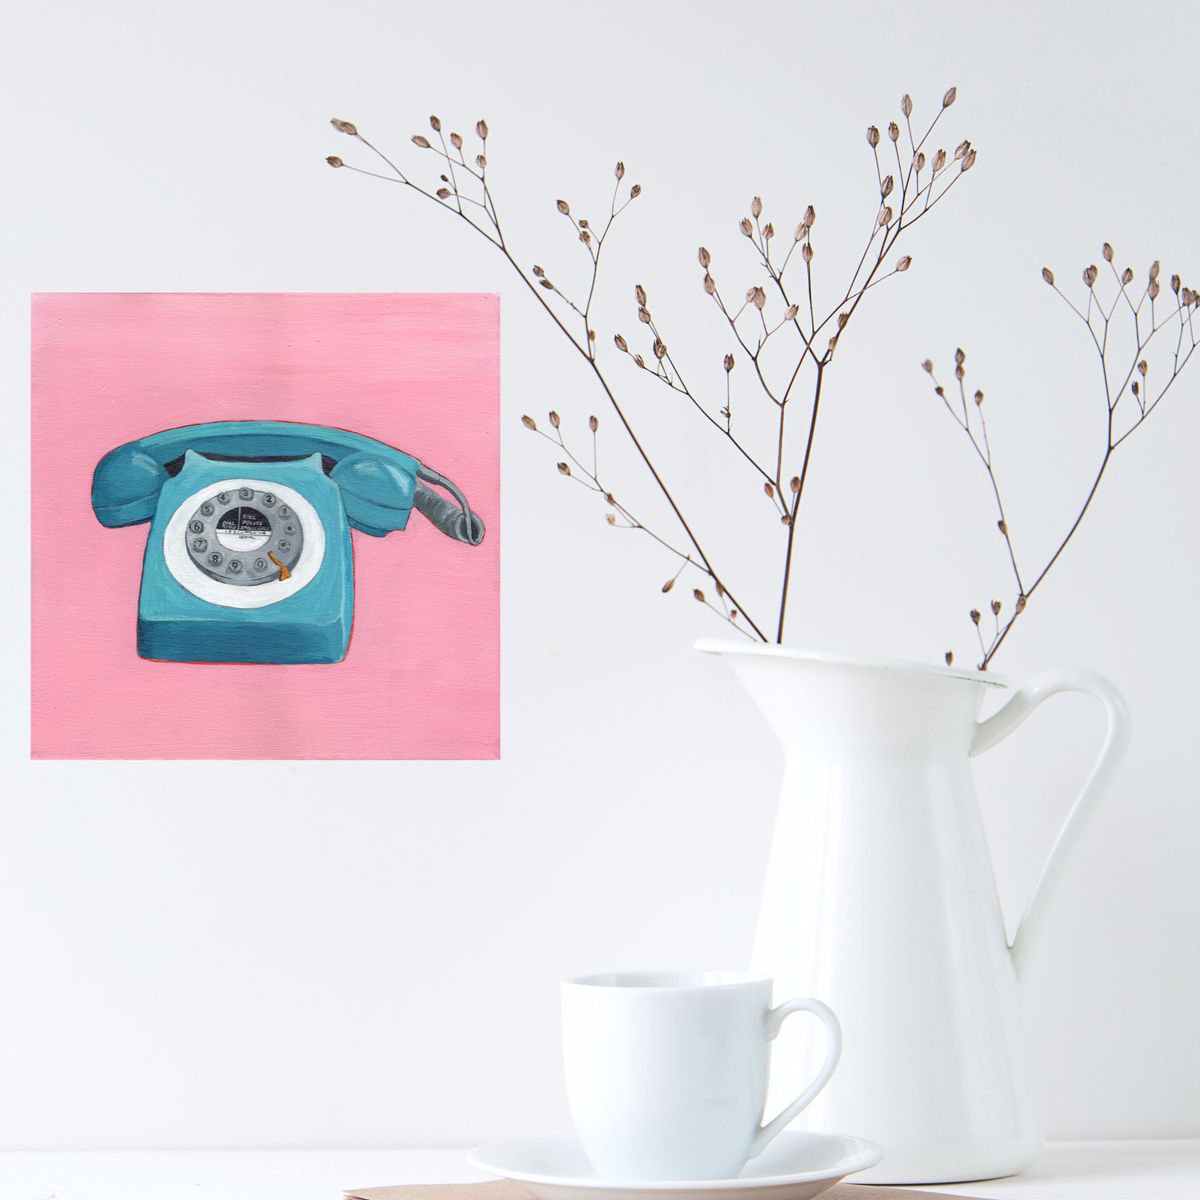 Teal Telephone - Retro Pop Illustration Painting of Vintage Phone